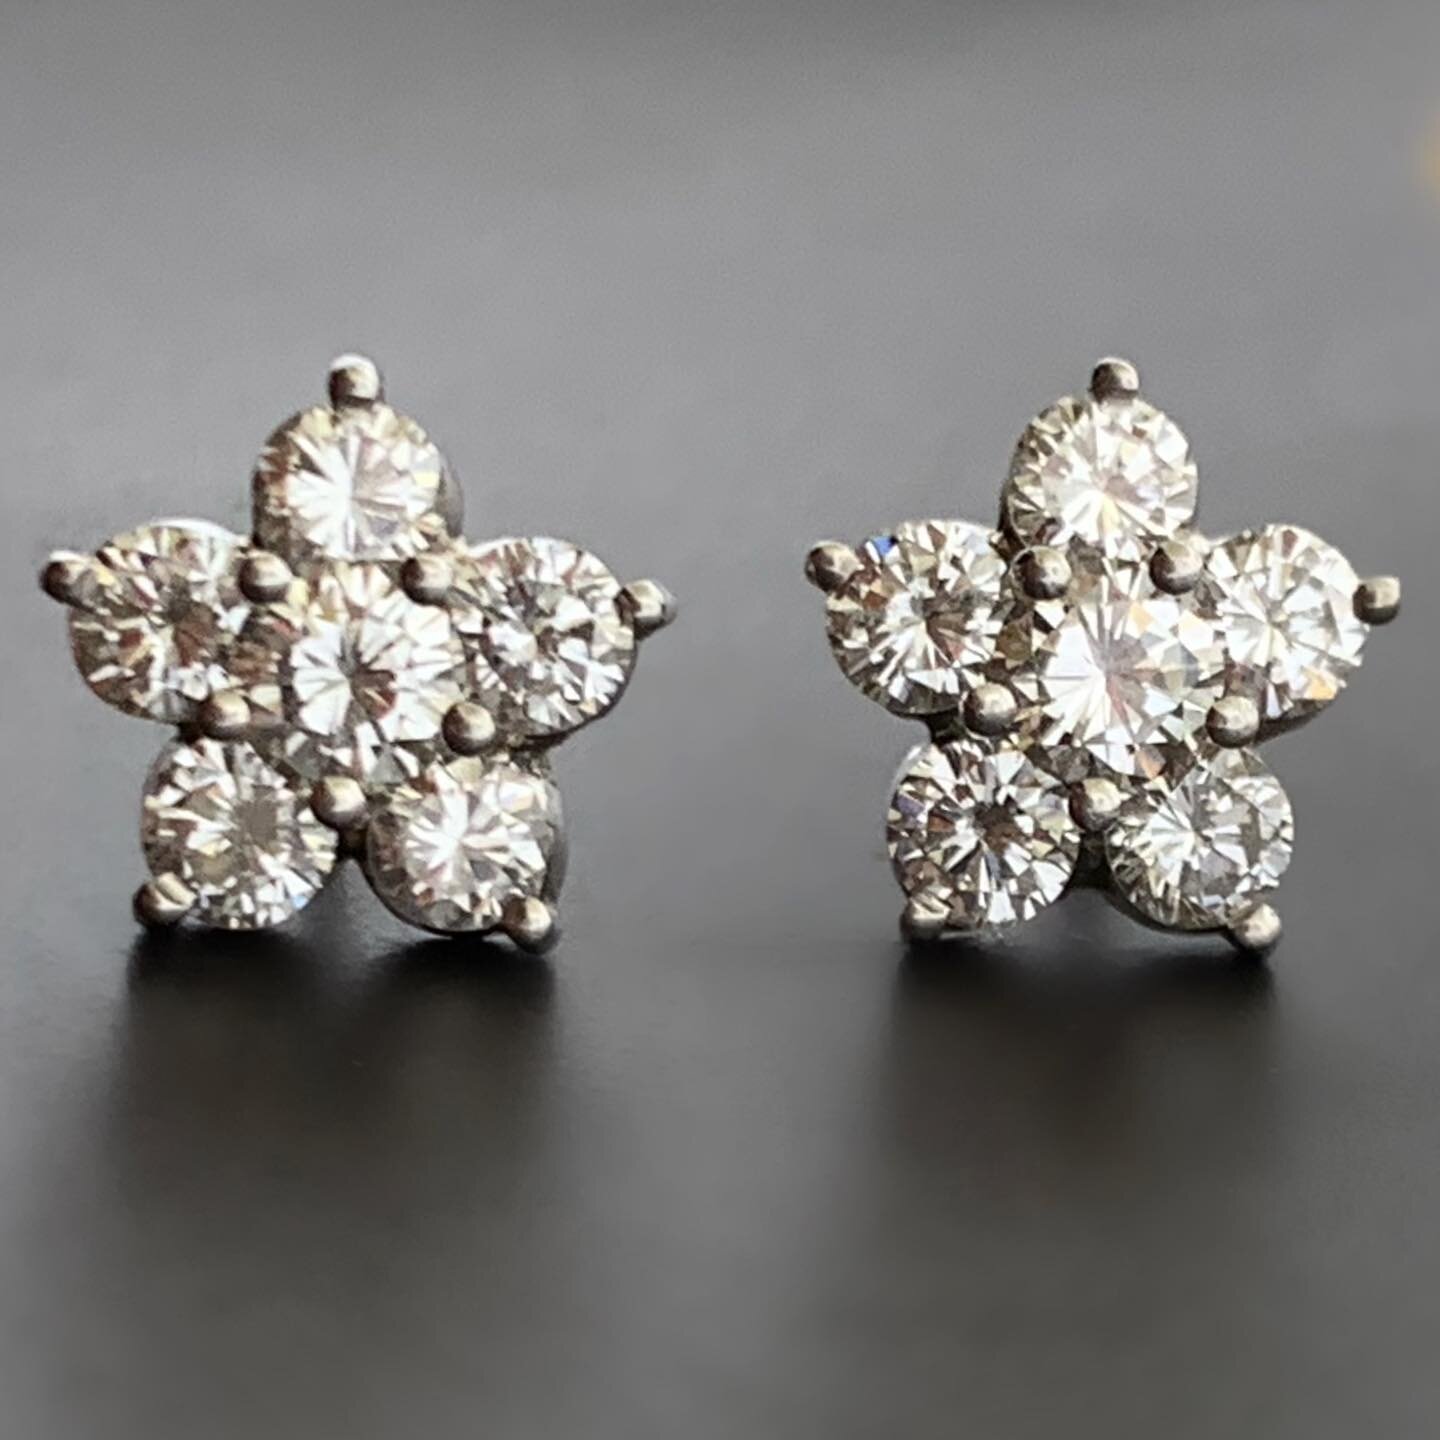 Estate 14k White Gold 12 Diamond Flower Earrings 💎 1.40tdw

Swipe for scale &gt;&gt;

DM to inquire 

805-02205